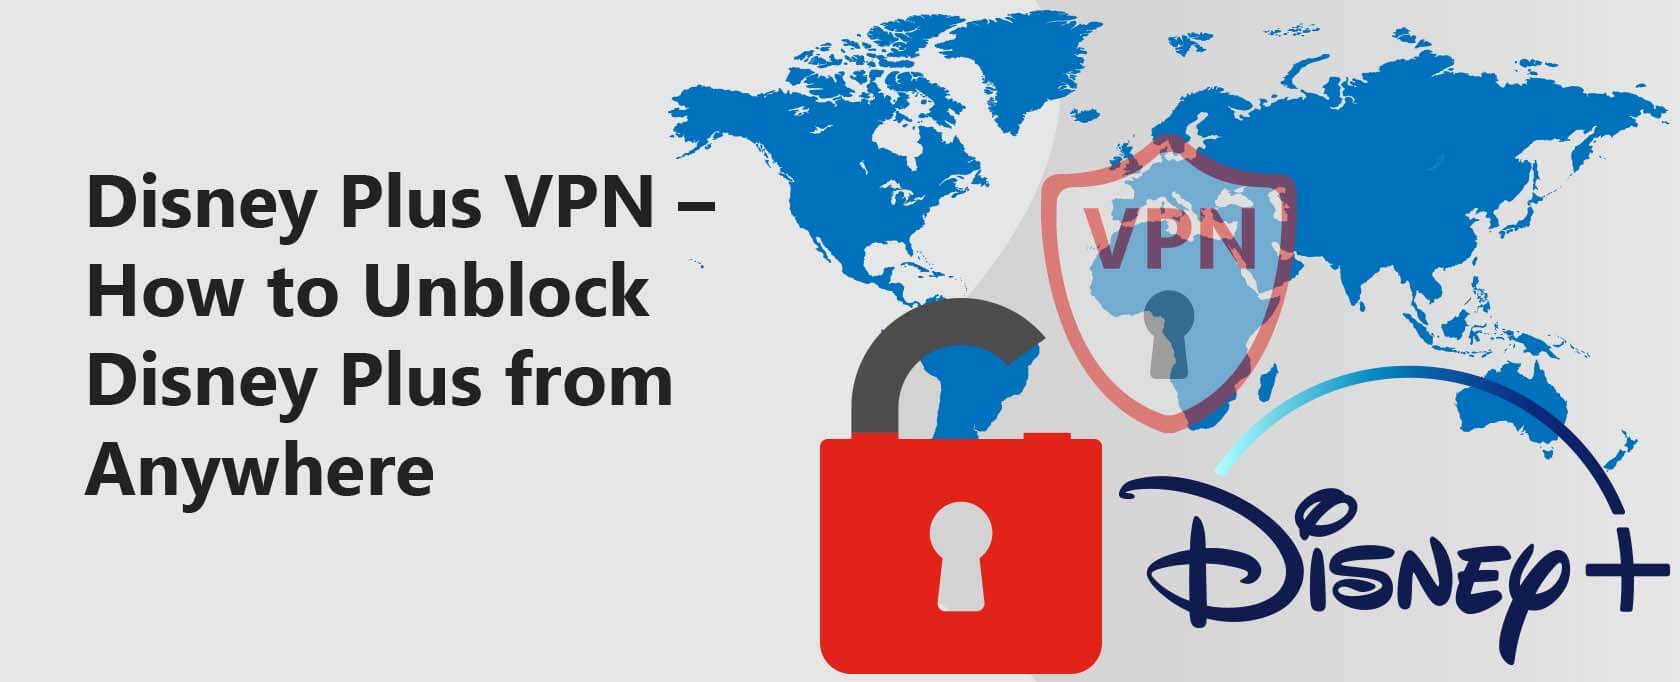 Disney Plus VPN – How to Unblock Disney Plus from Anywhere